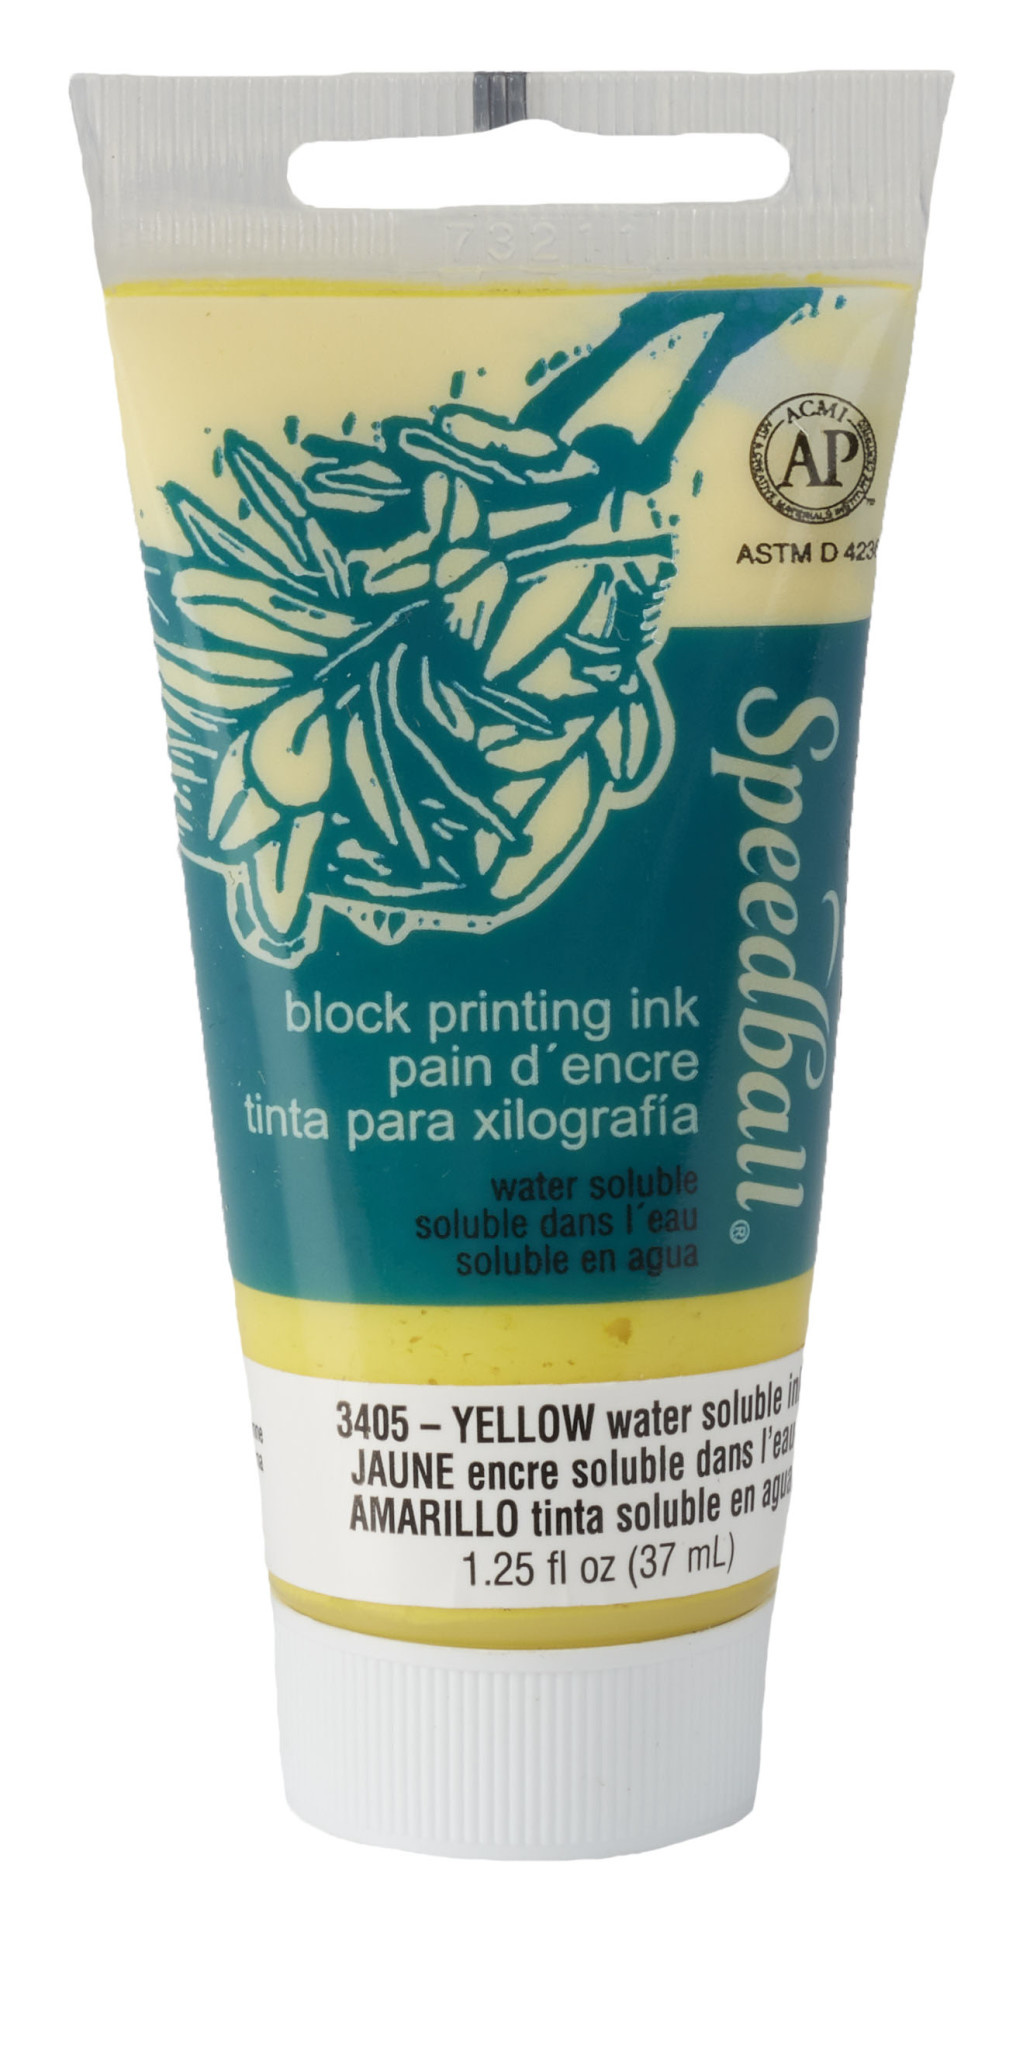 Speedball Block Printing Fabric Ink 2.5 oz. Yellow